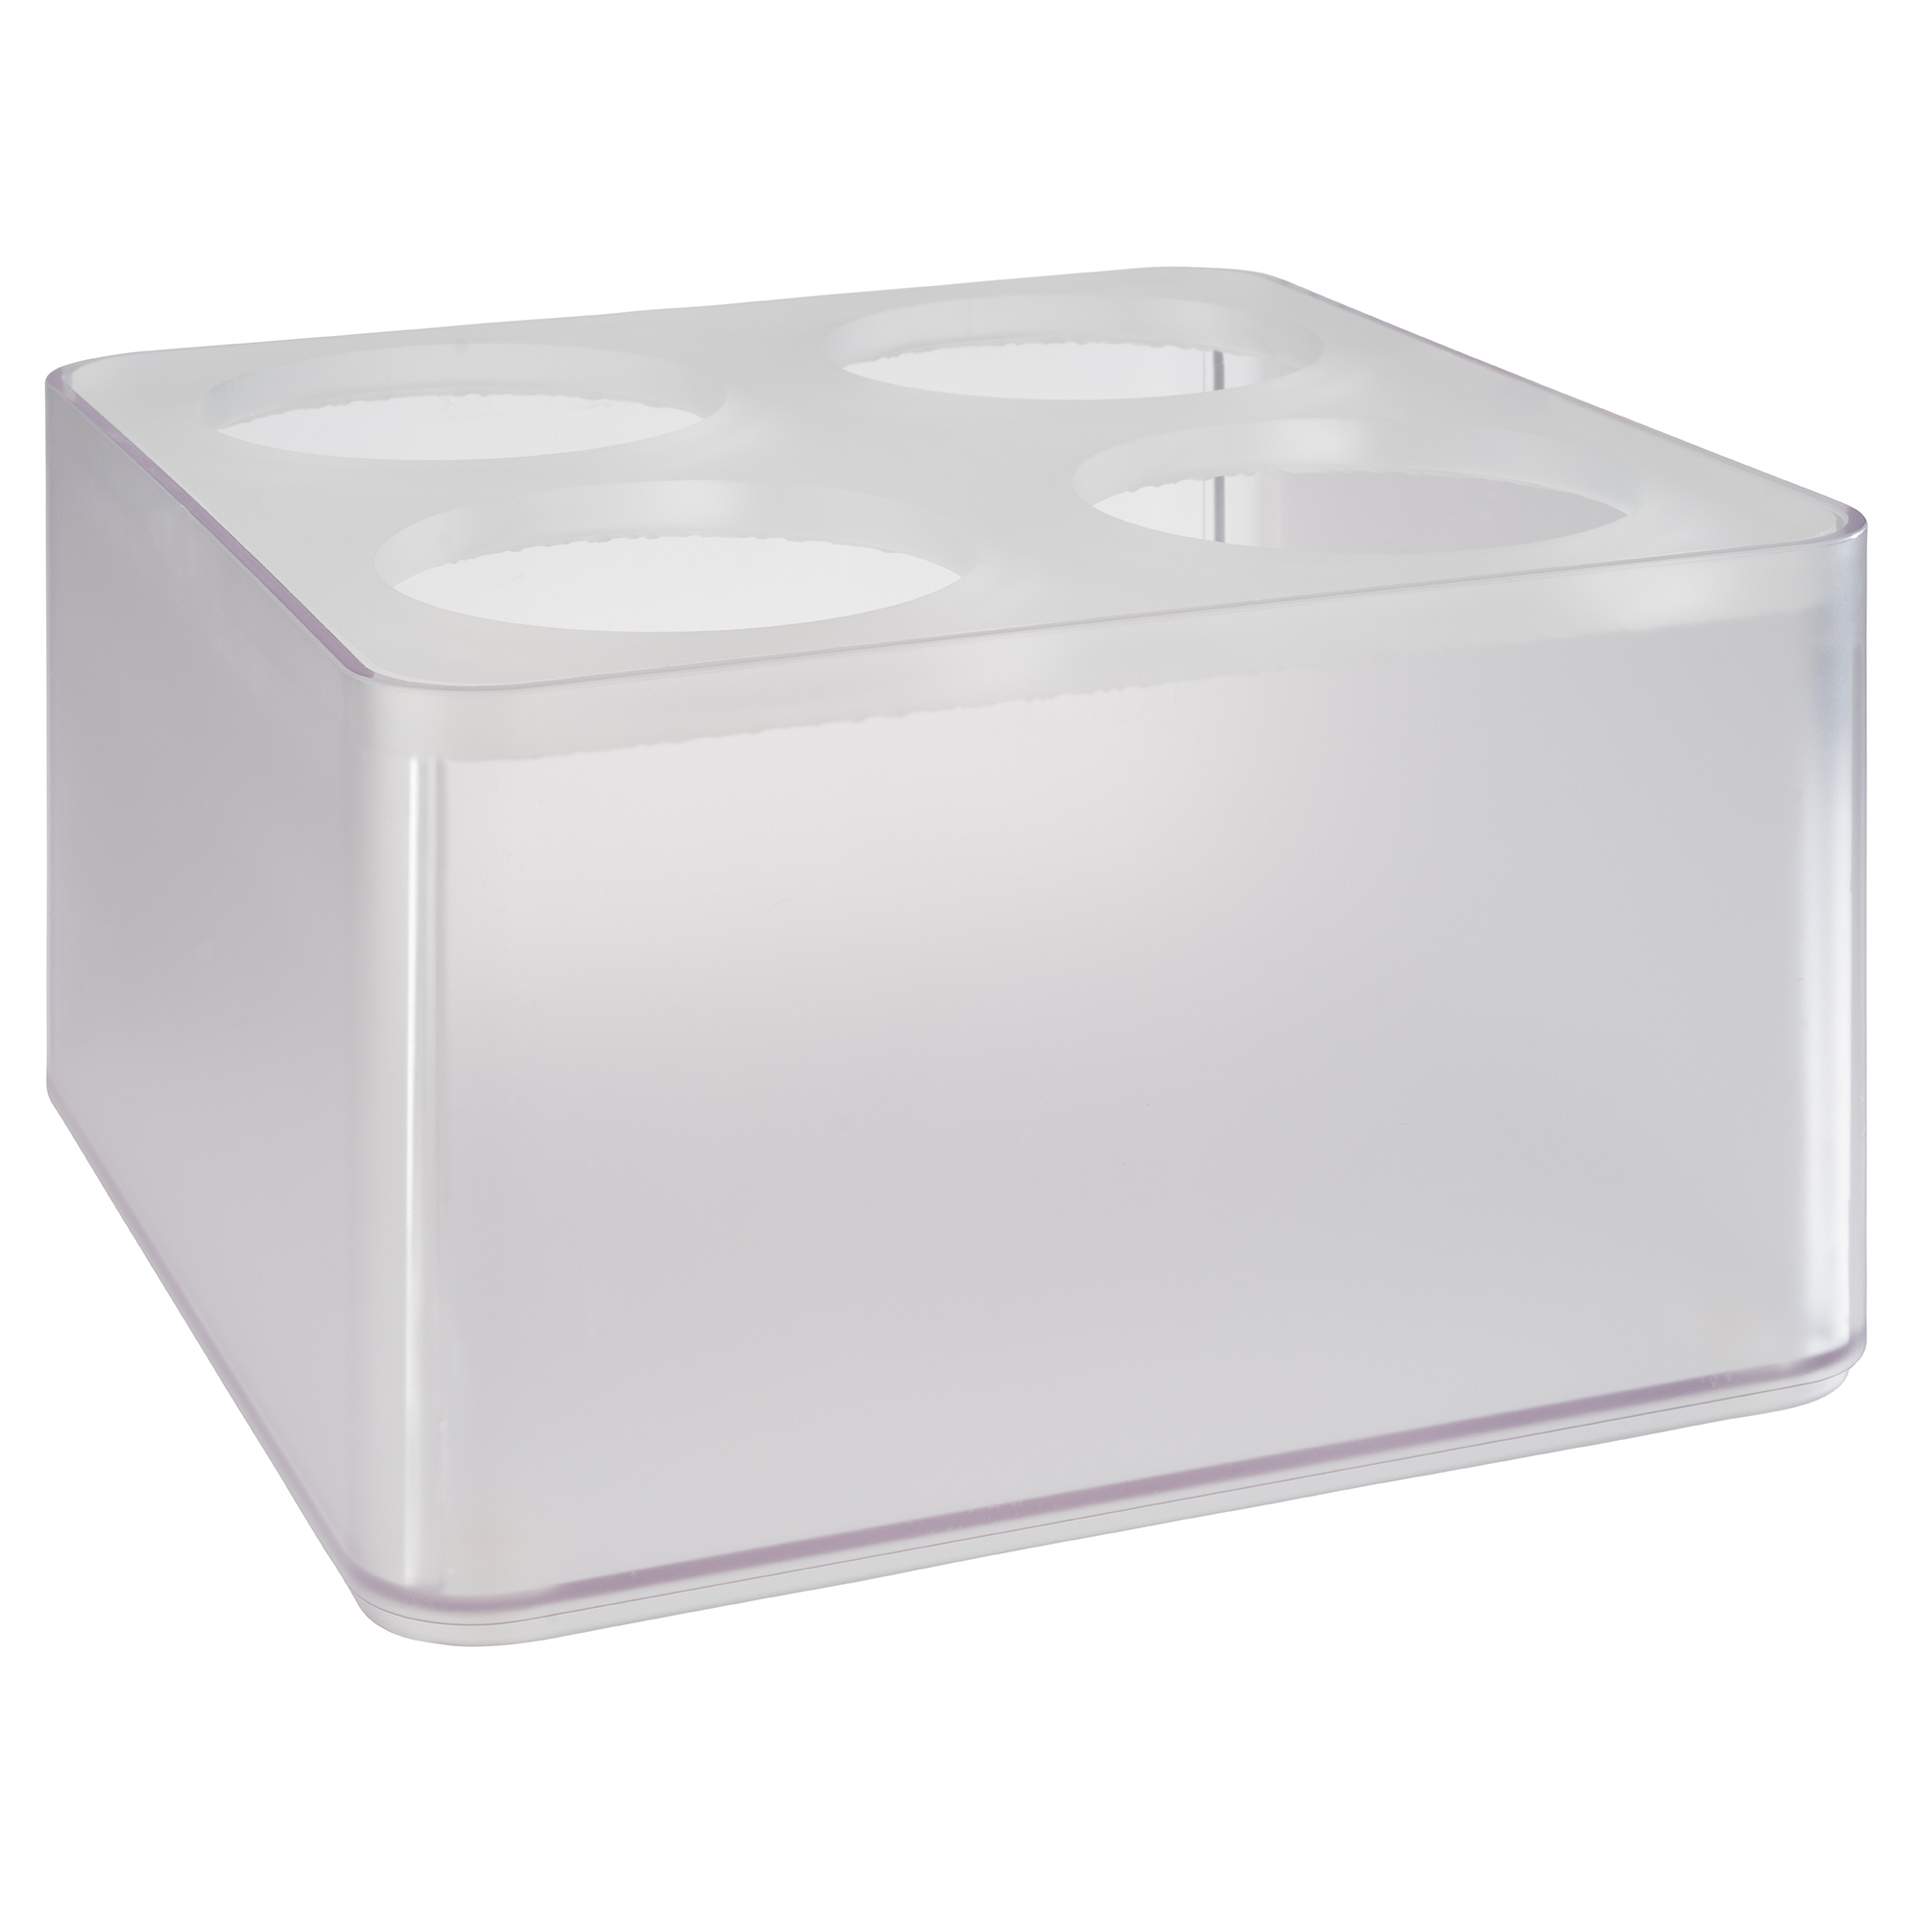 Kühlbox - Serie Frosty - Abm. 27,0 x 27,0 x 15,0 cm - Inhalt 7,5 l - SAN - 93230-B